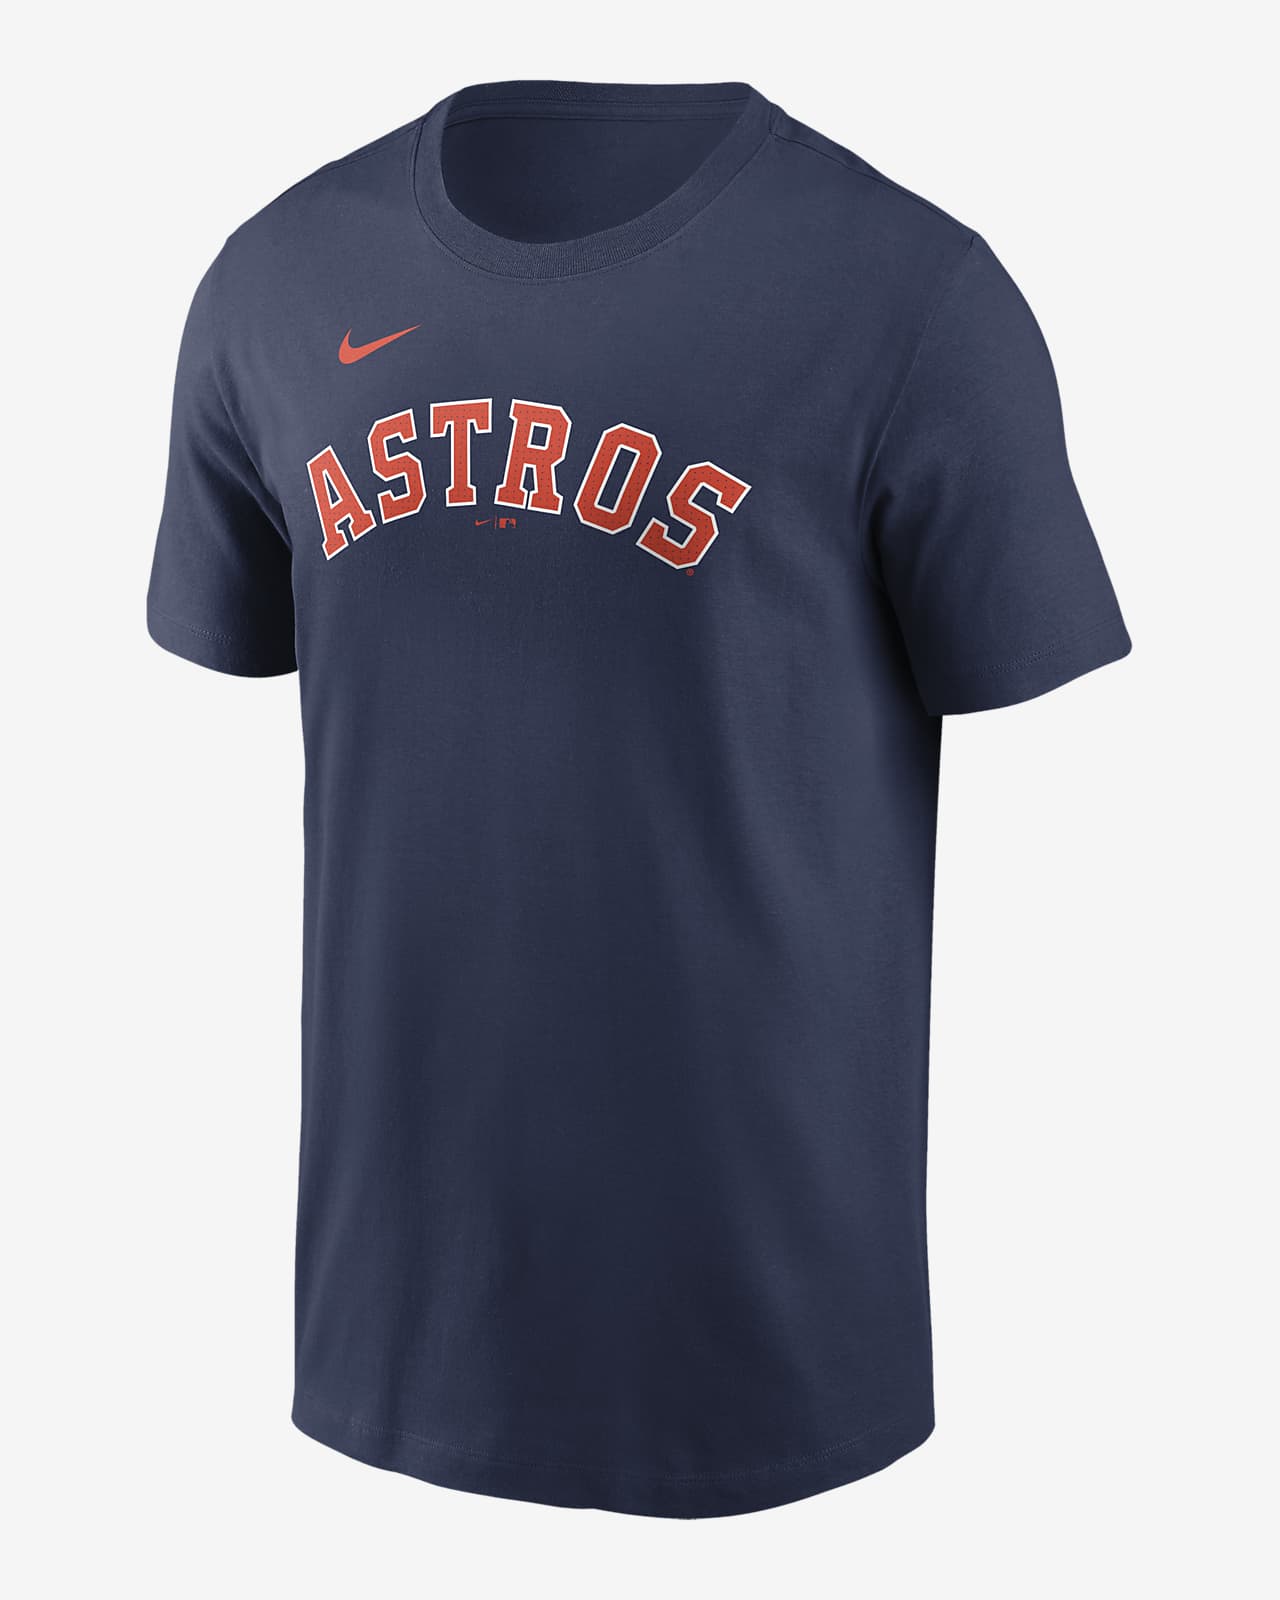 José Altuve Houston Astros Fuse Men's Nike MLB T-Shirt.